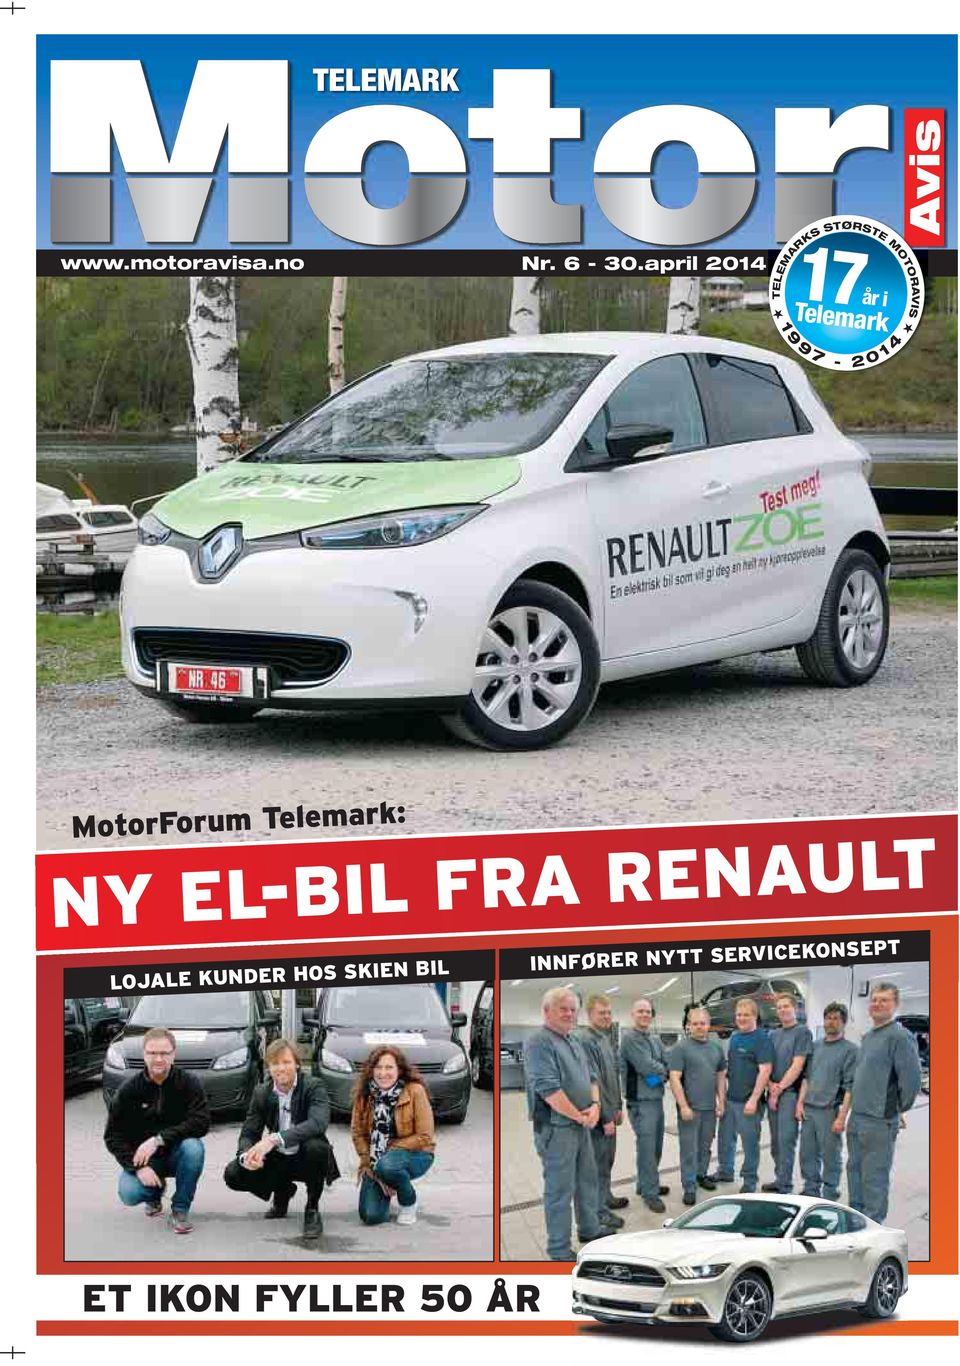 9 9 7-2 0 1 4 MotorForum Telemark: NY EL-BIL FRA RENAULT